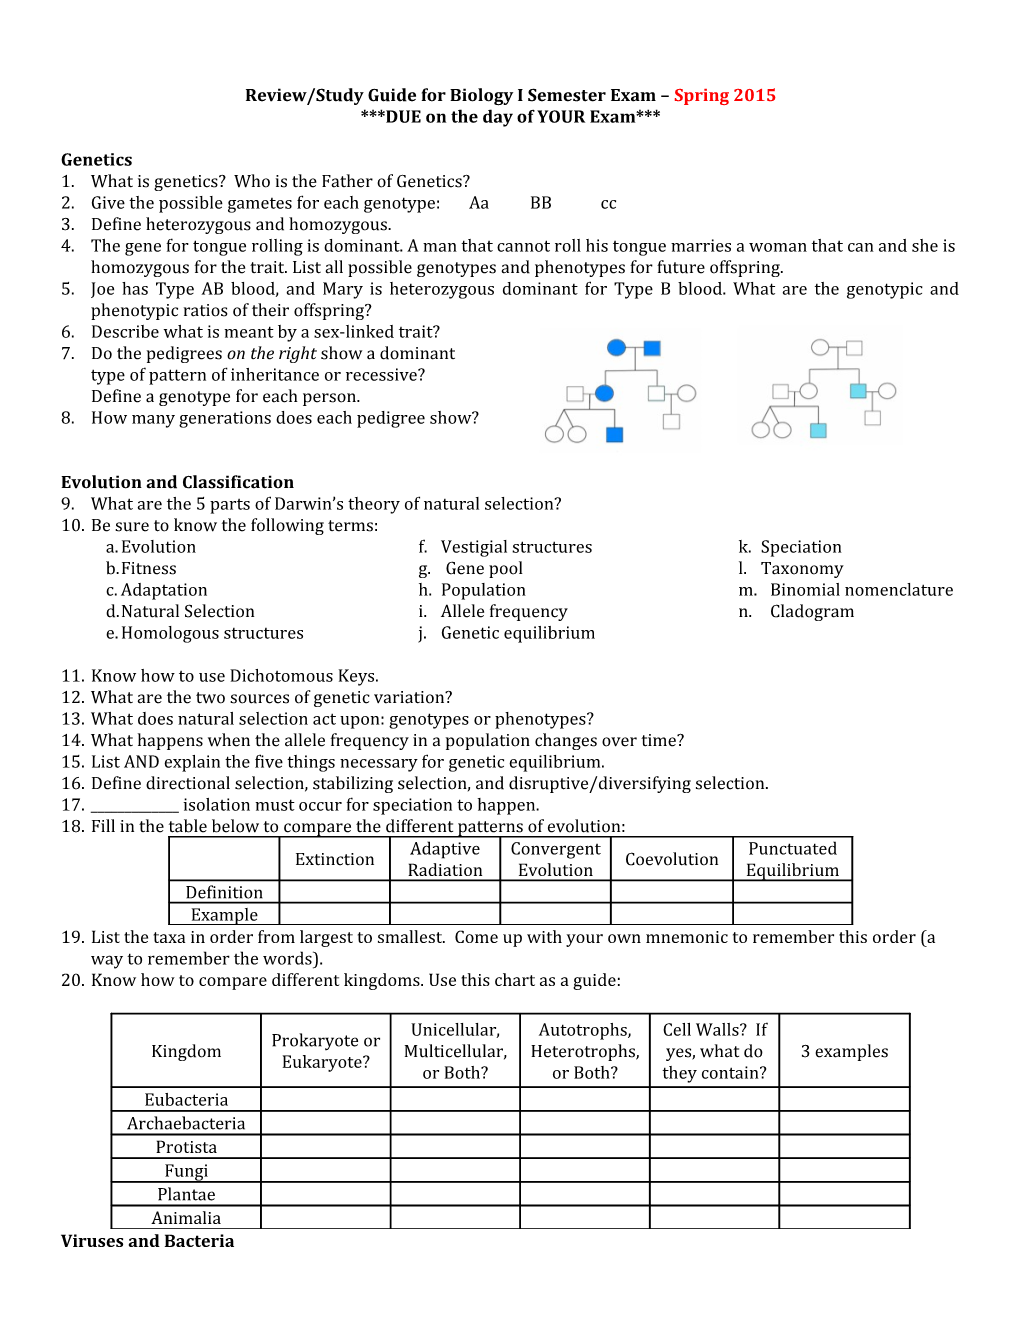 Review/Study Guide for Biology I Semester Exam Spring 2015